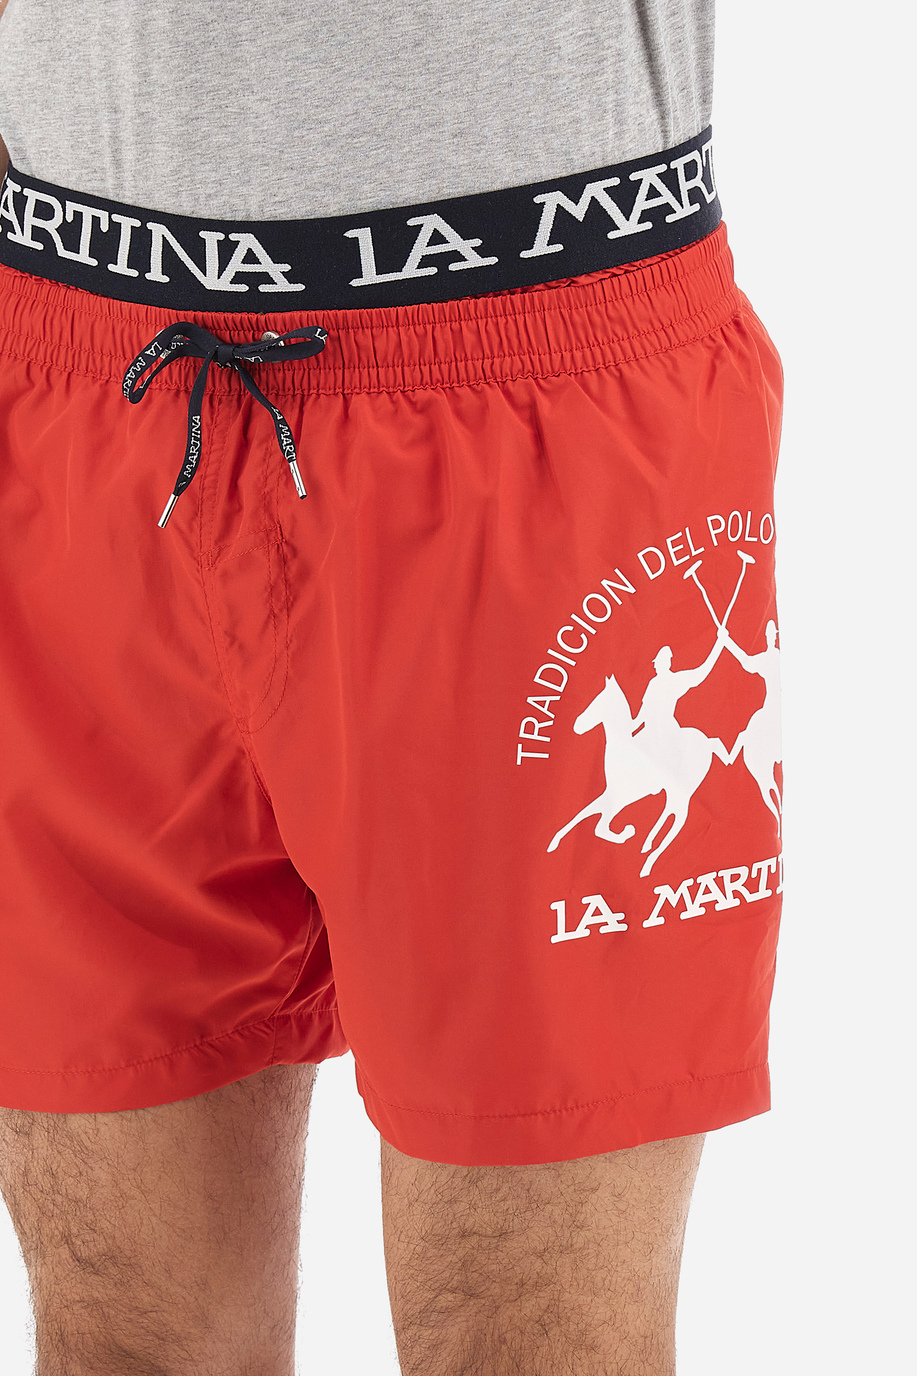 Regular fit men's swim trunks with drawstring waist - Virdis - Swimwear | La Martina - Official Online Shop